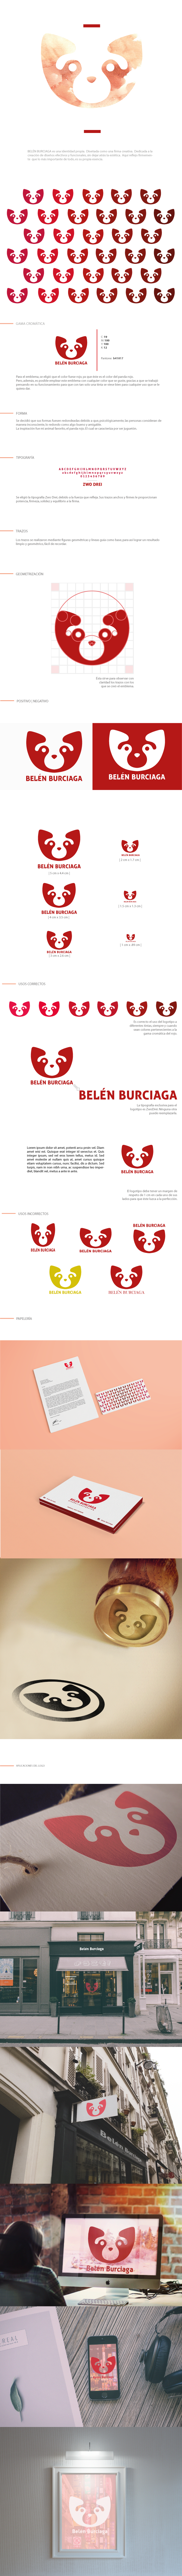 design red panda identity logo red